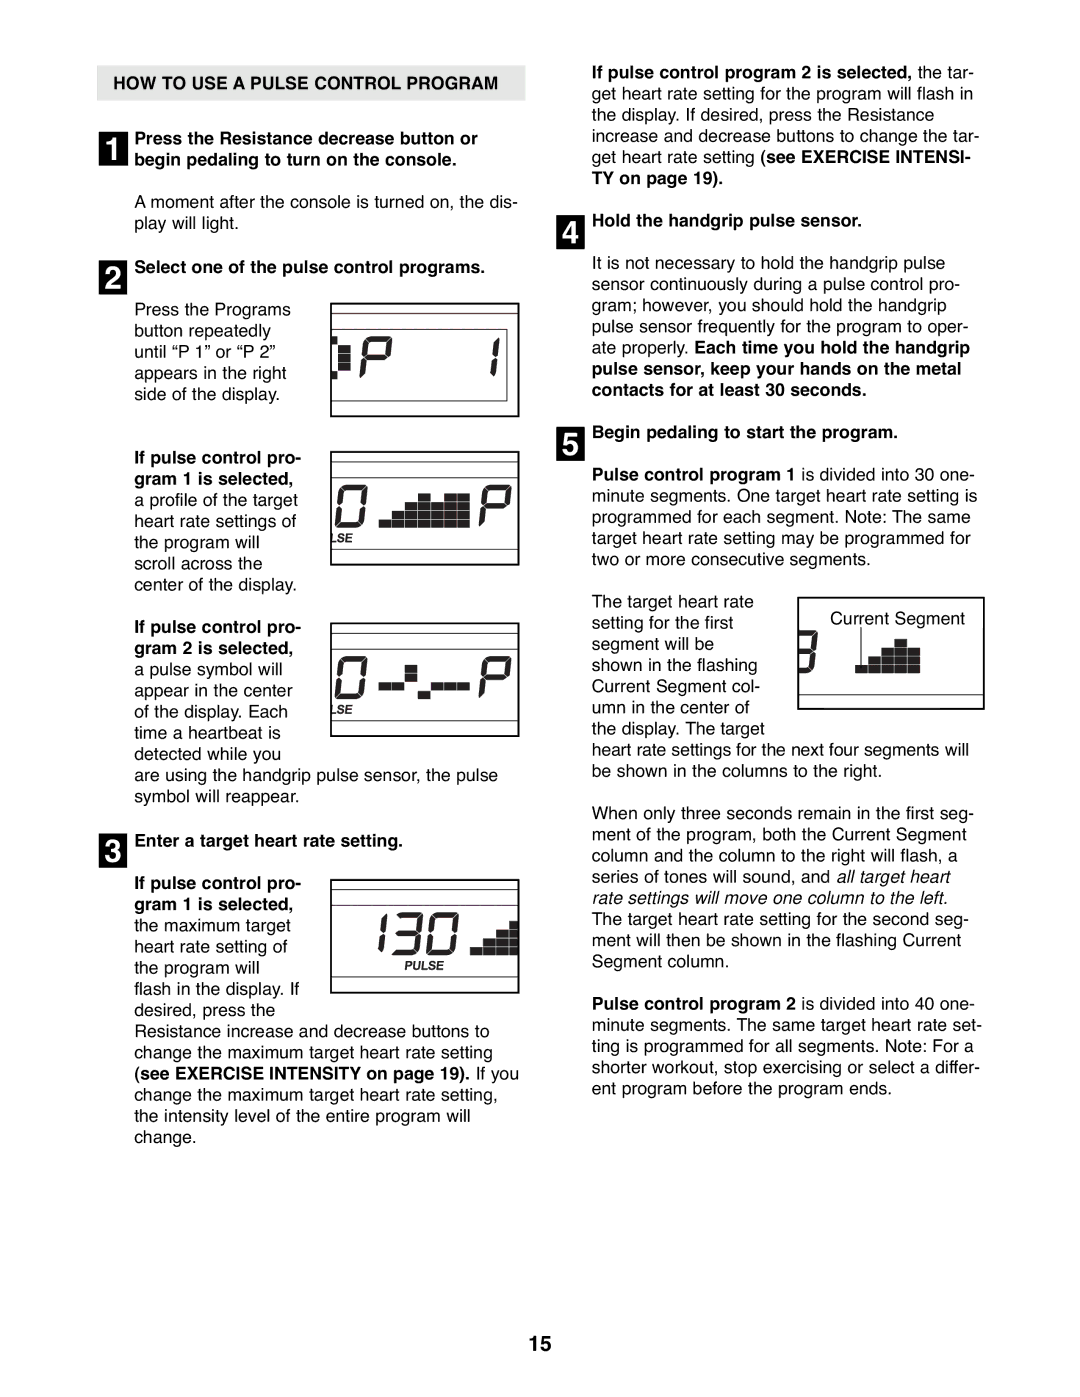 ProForm PFEL6026.0 user manual HOW to USE a Pulse Control Program 